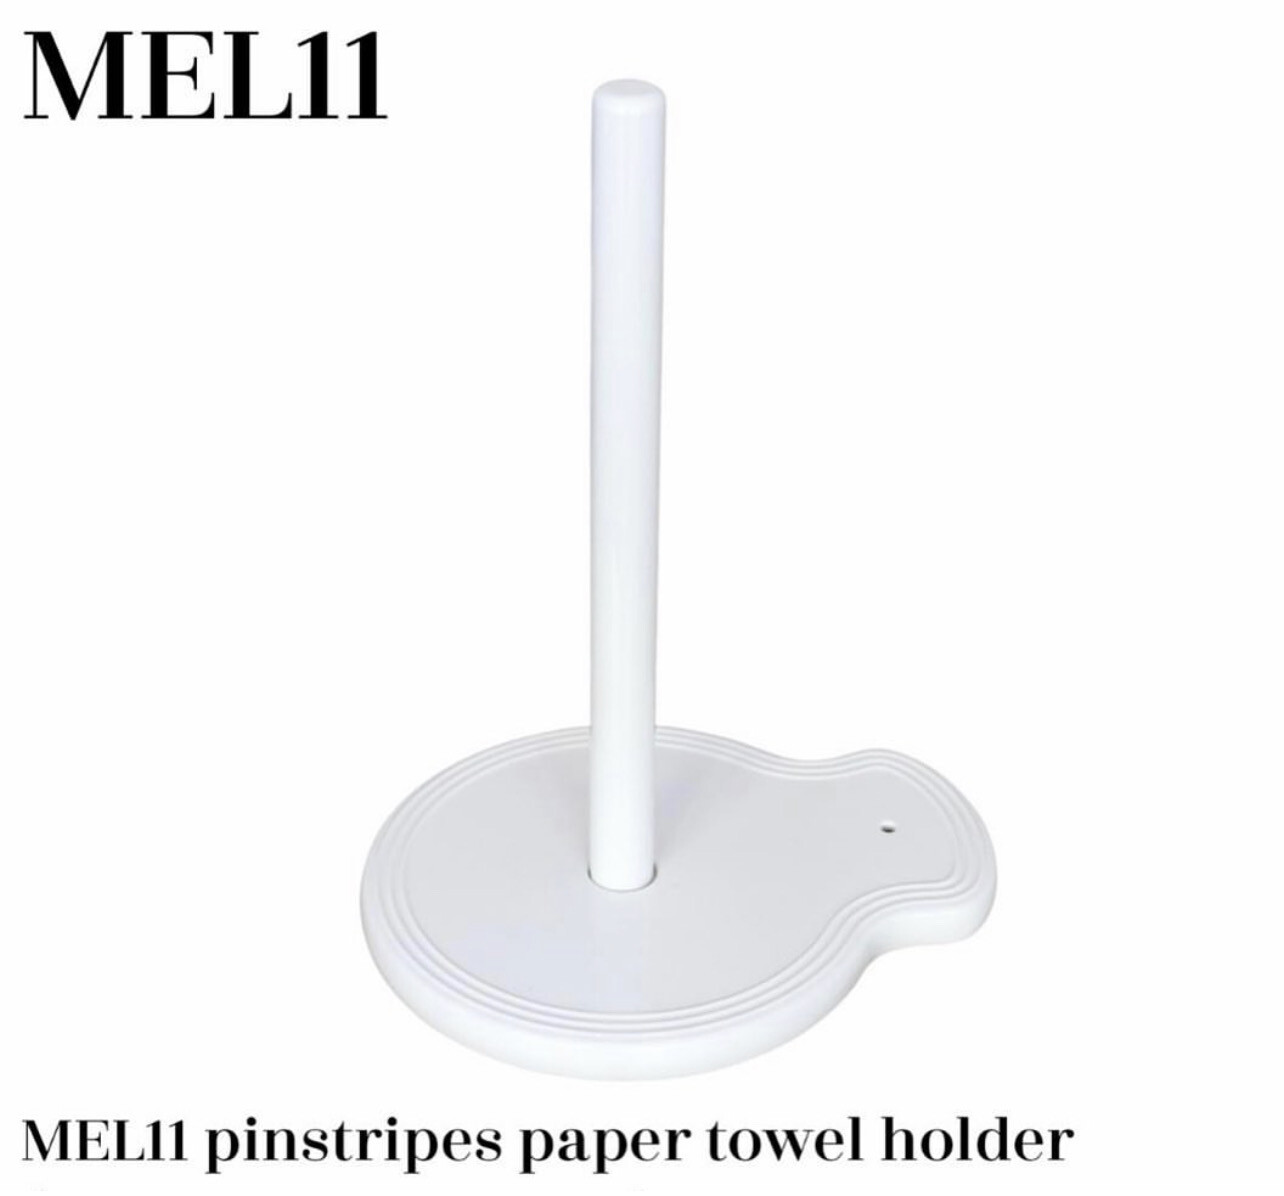 MEL11 Pinstripe Paper Towel Holder 9”x7.5”x13.5”